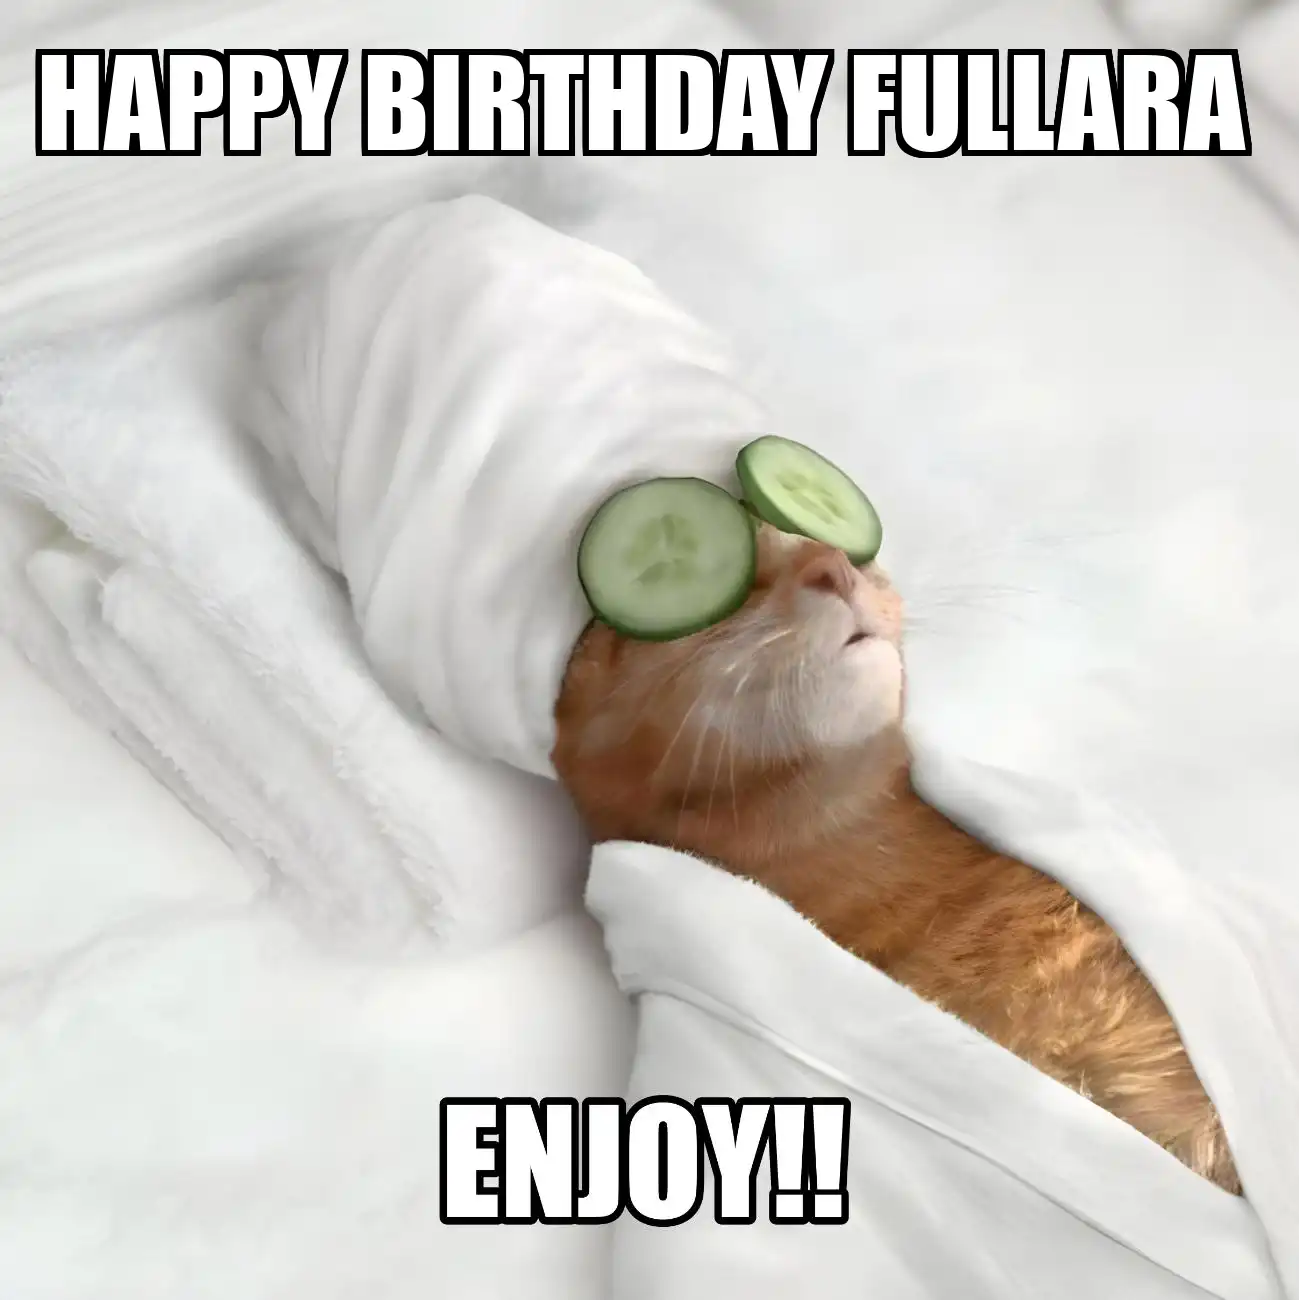 Happy Birthday Fullara Enjoy Cat Meme